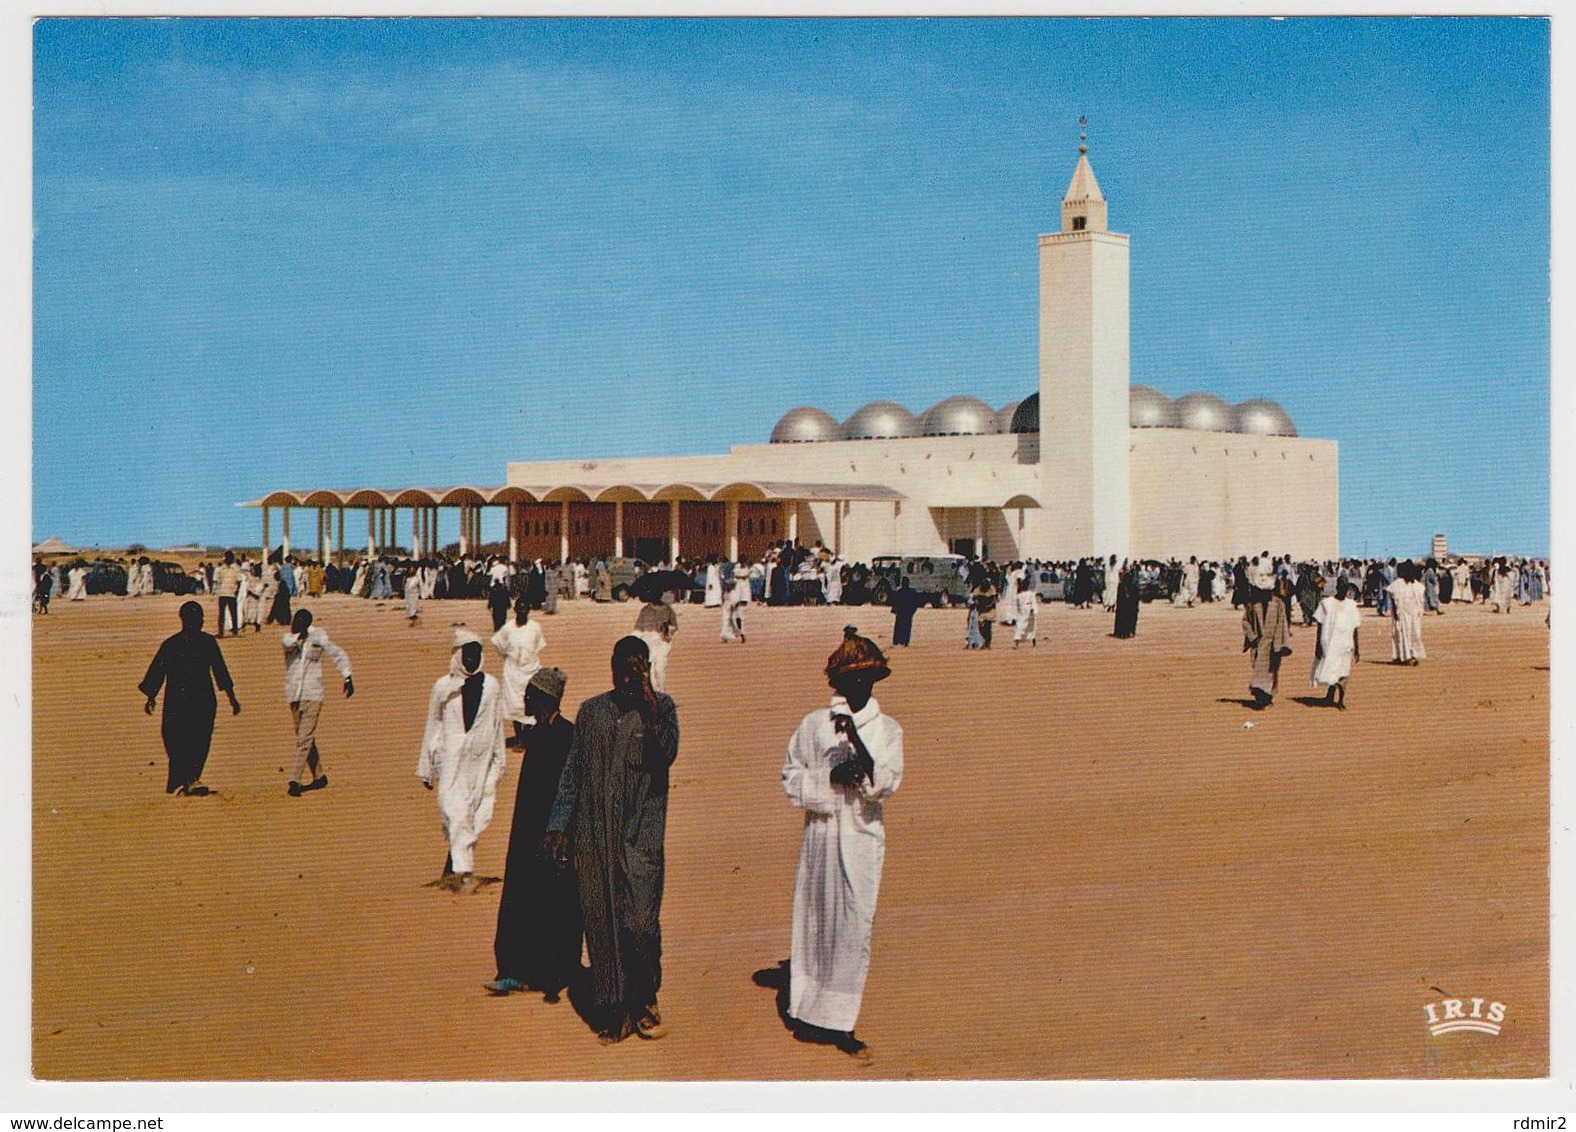 1786/ NOUAKCHOTT, Mauritanie. Mosquée / Mosque. - Non écrite. Unused. No Escrita. Non Scritta. Ungelaufen. - Mauritanie